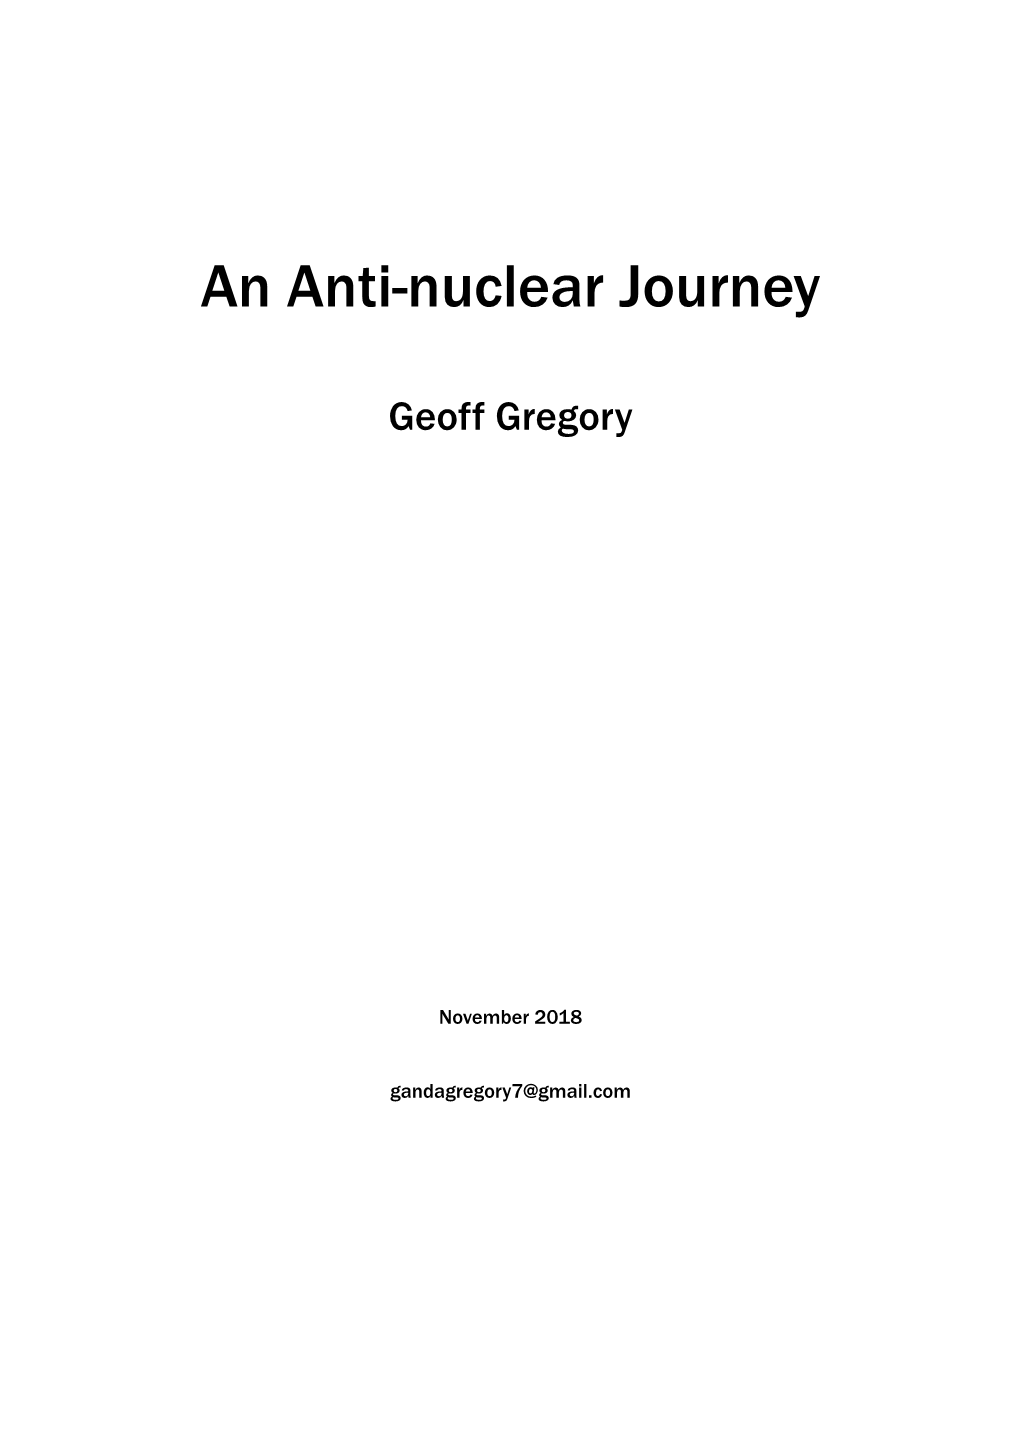 An Anti-Nuclear Journey